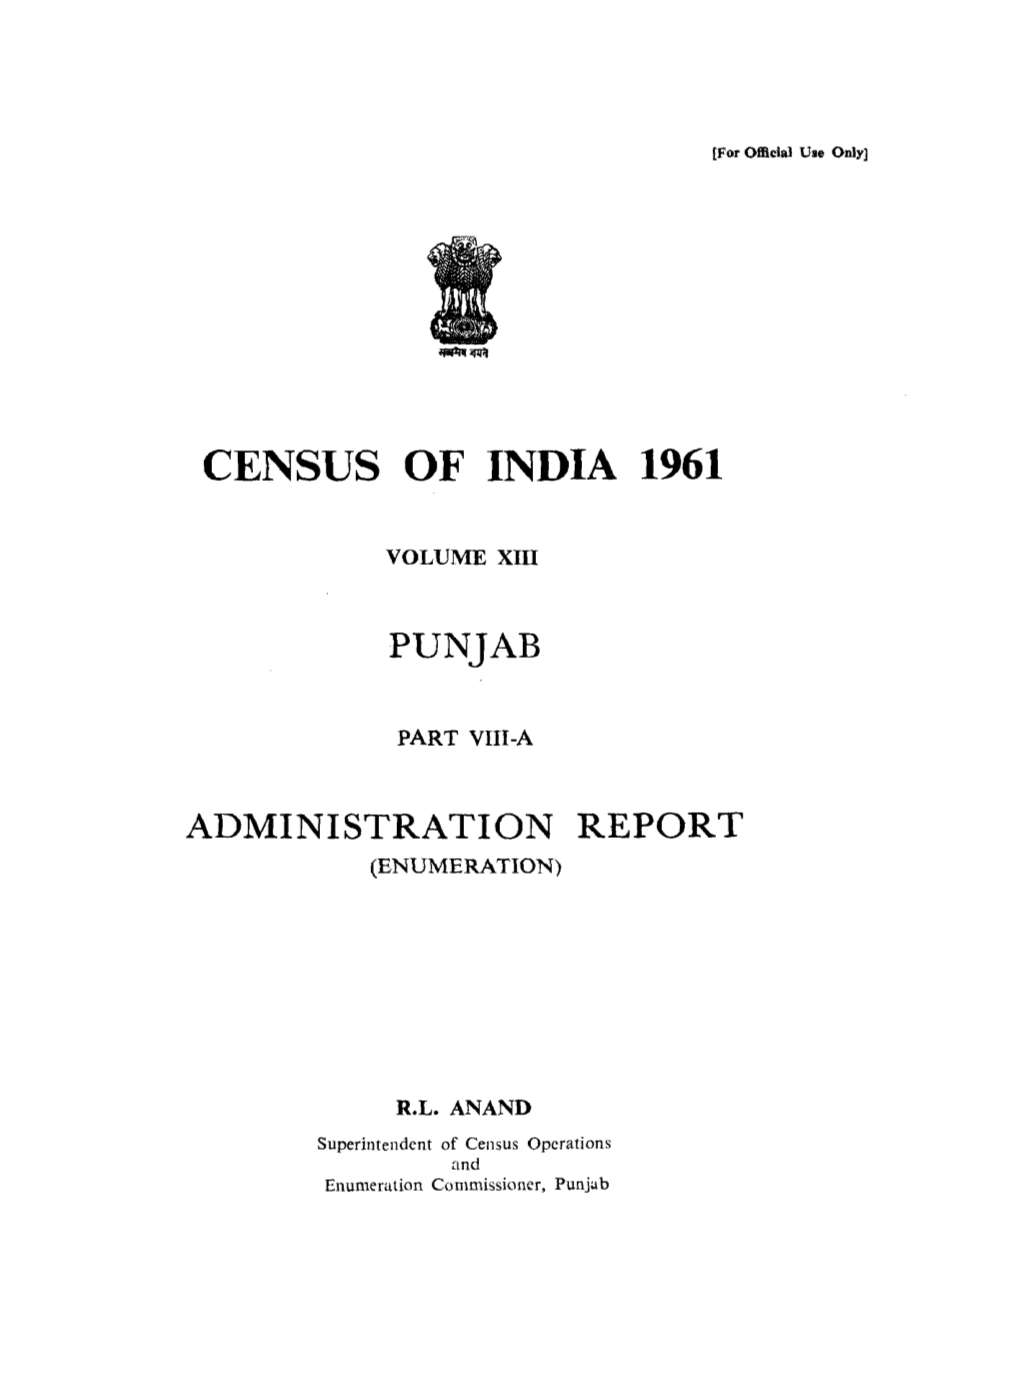 Administration Report , Part VIII-A, Vol-XIII, Punjab